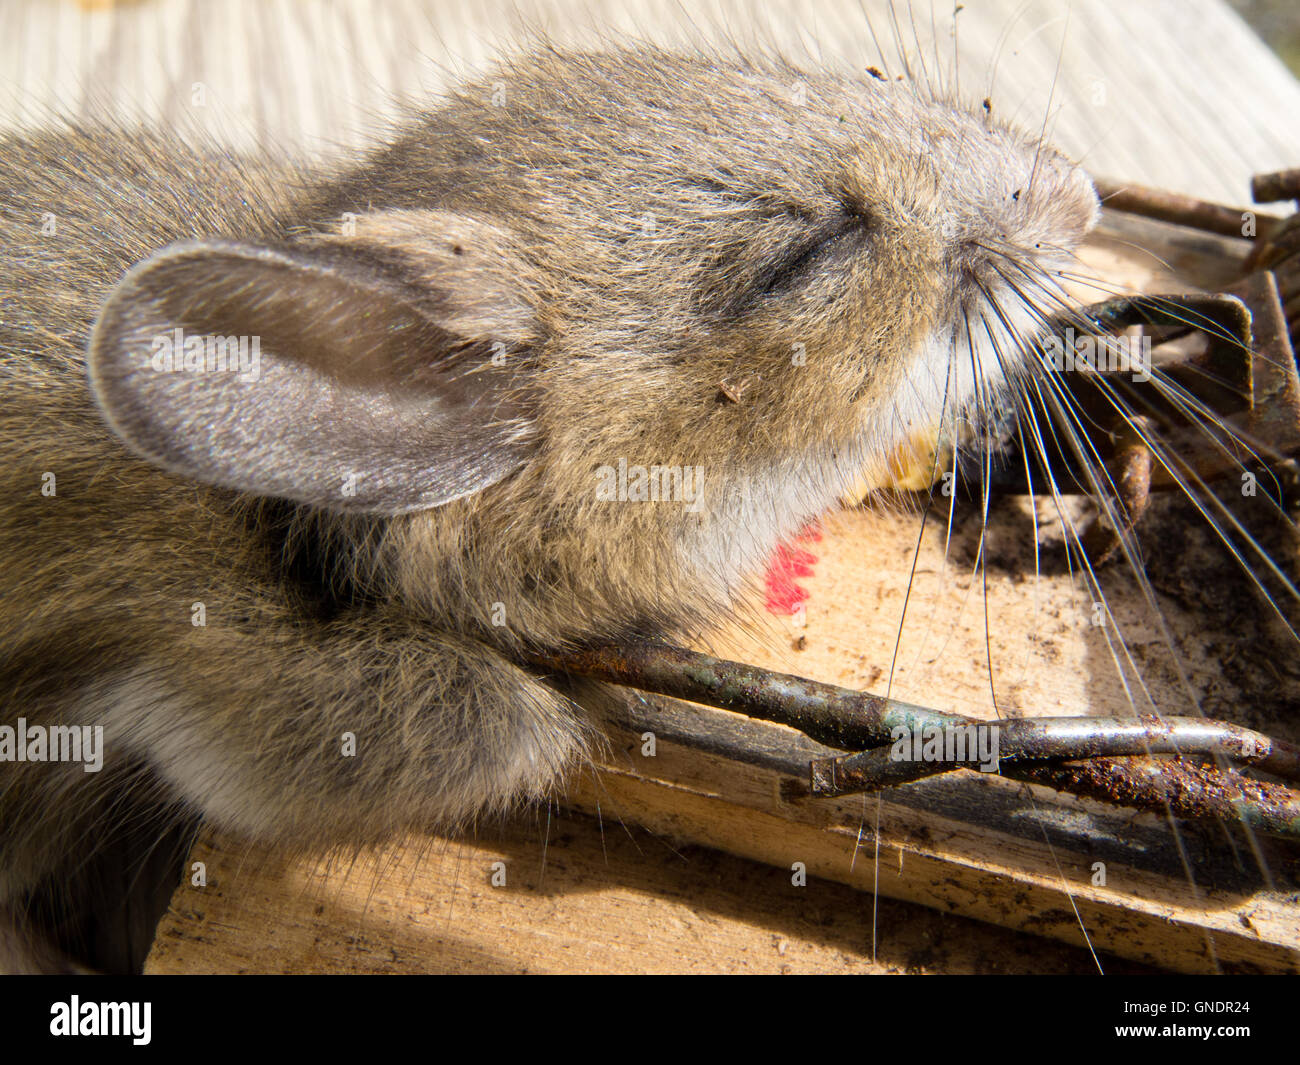 https://c8.alamy.com/comp/GNDR24/dead-deer-mouse-peromyscus-sp-mouse-trap-killed-GNDR24.jpg